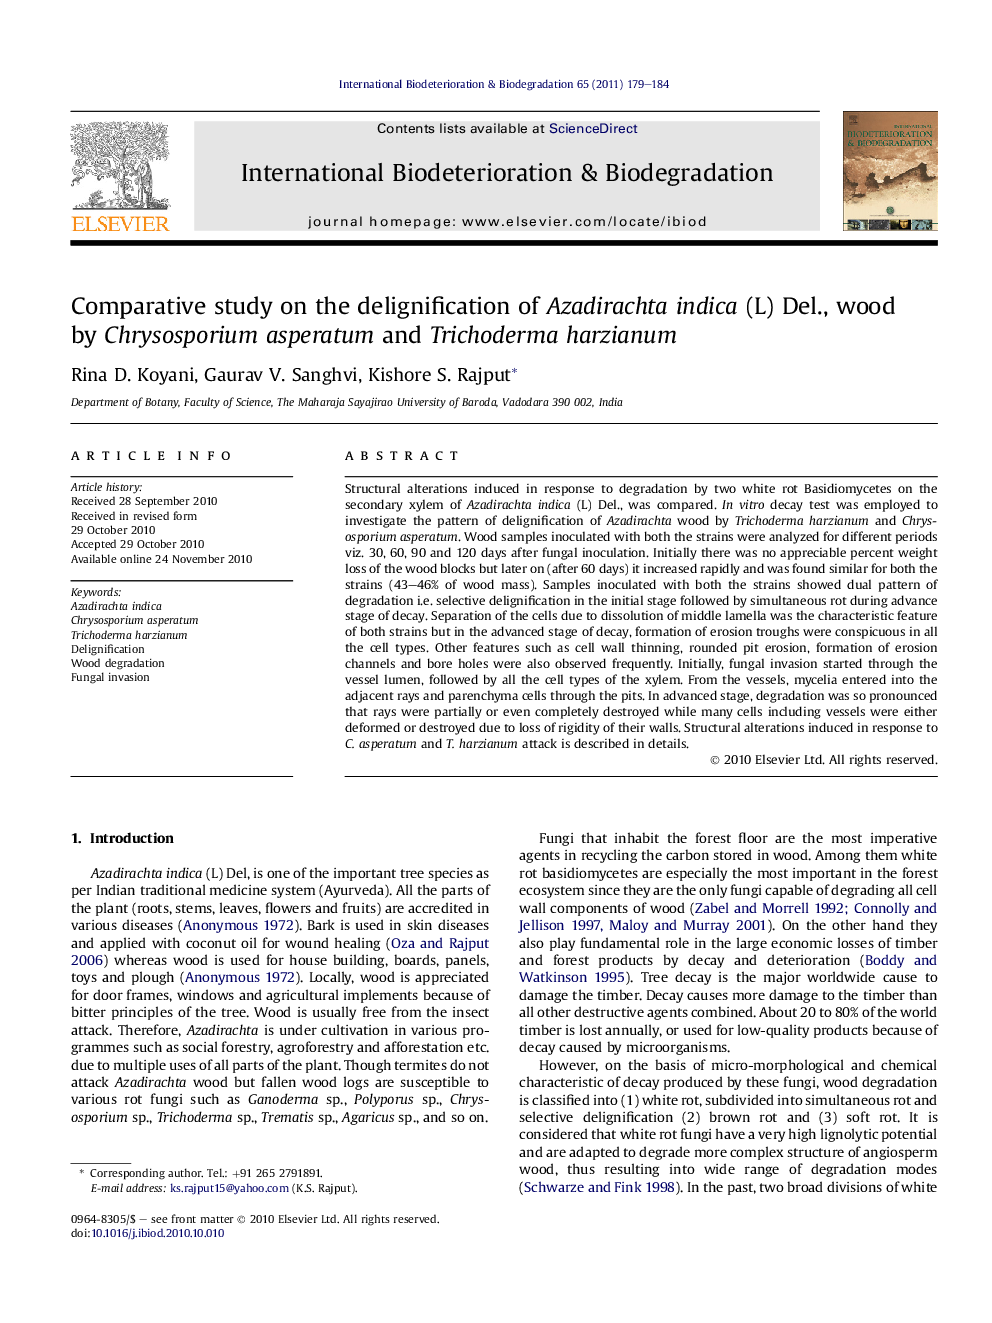 Comparative study on the delignification of Azadirachta indica (L) Del., wood by Chrysosporium asperatum and Trichoderma harzianum